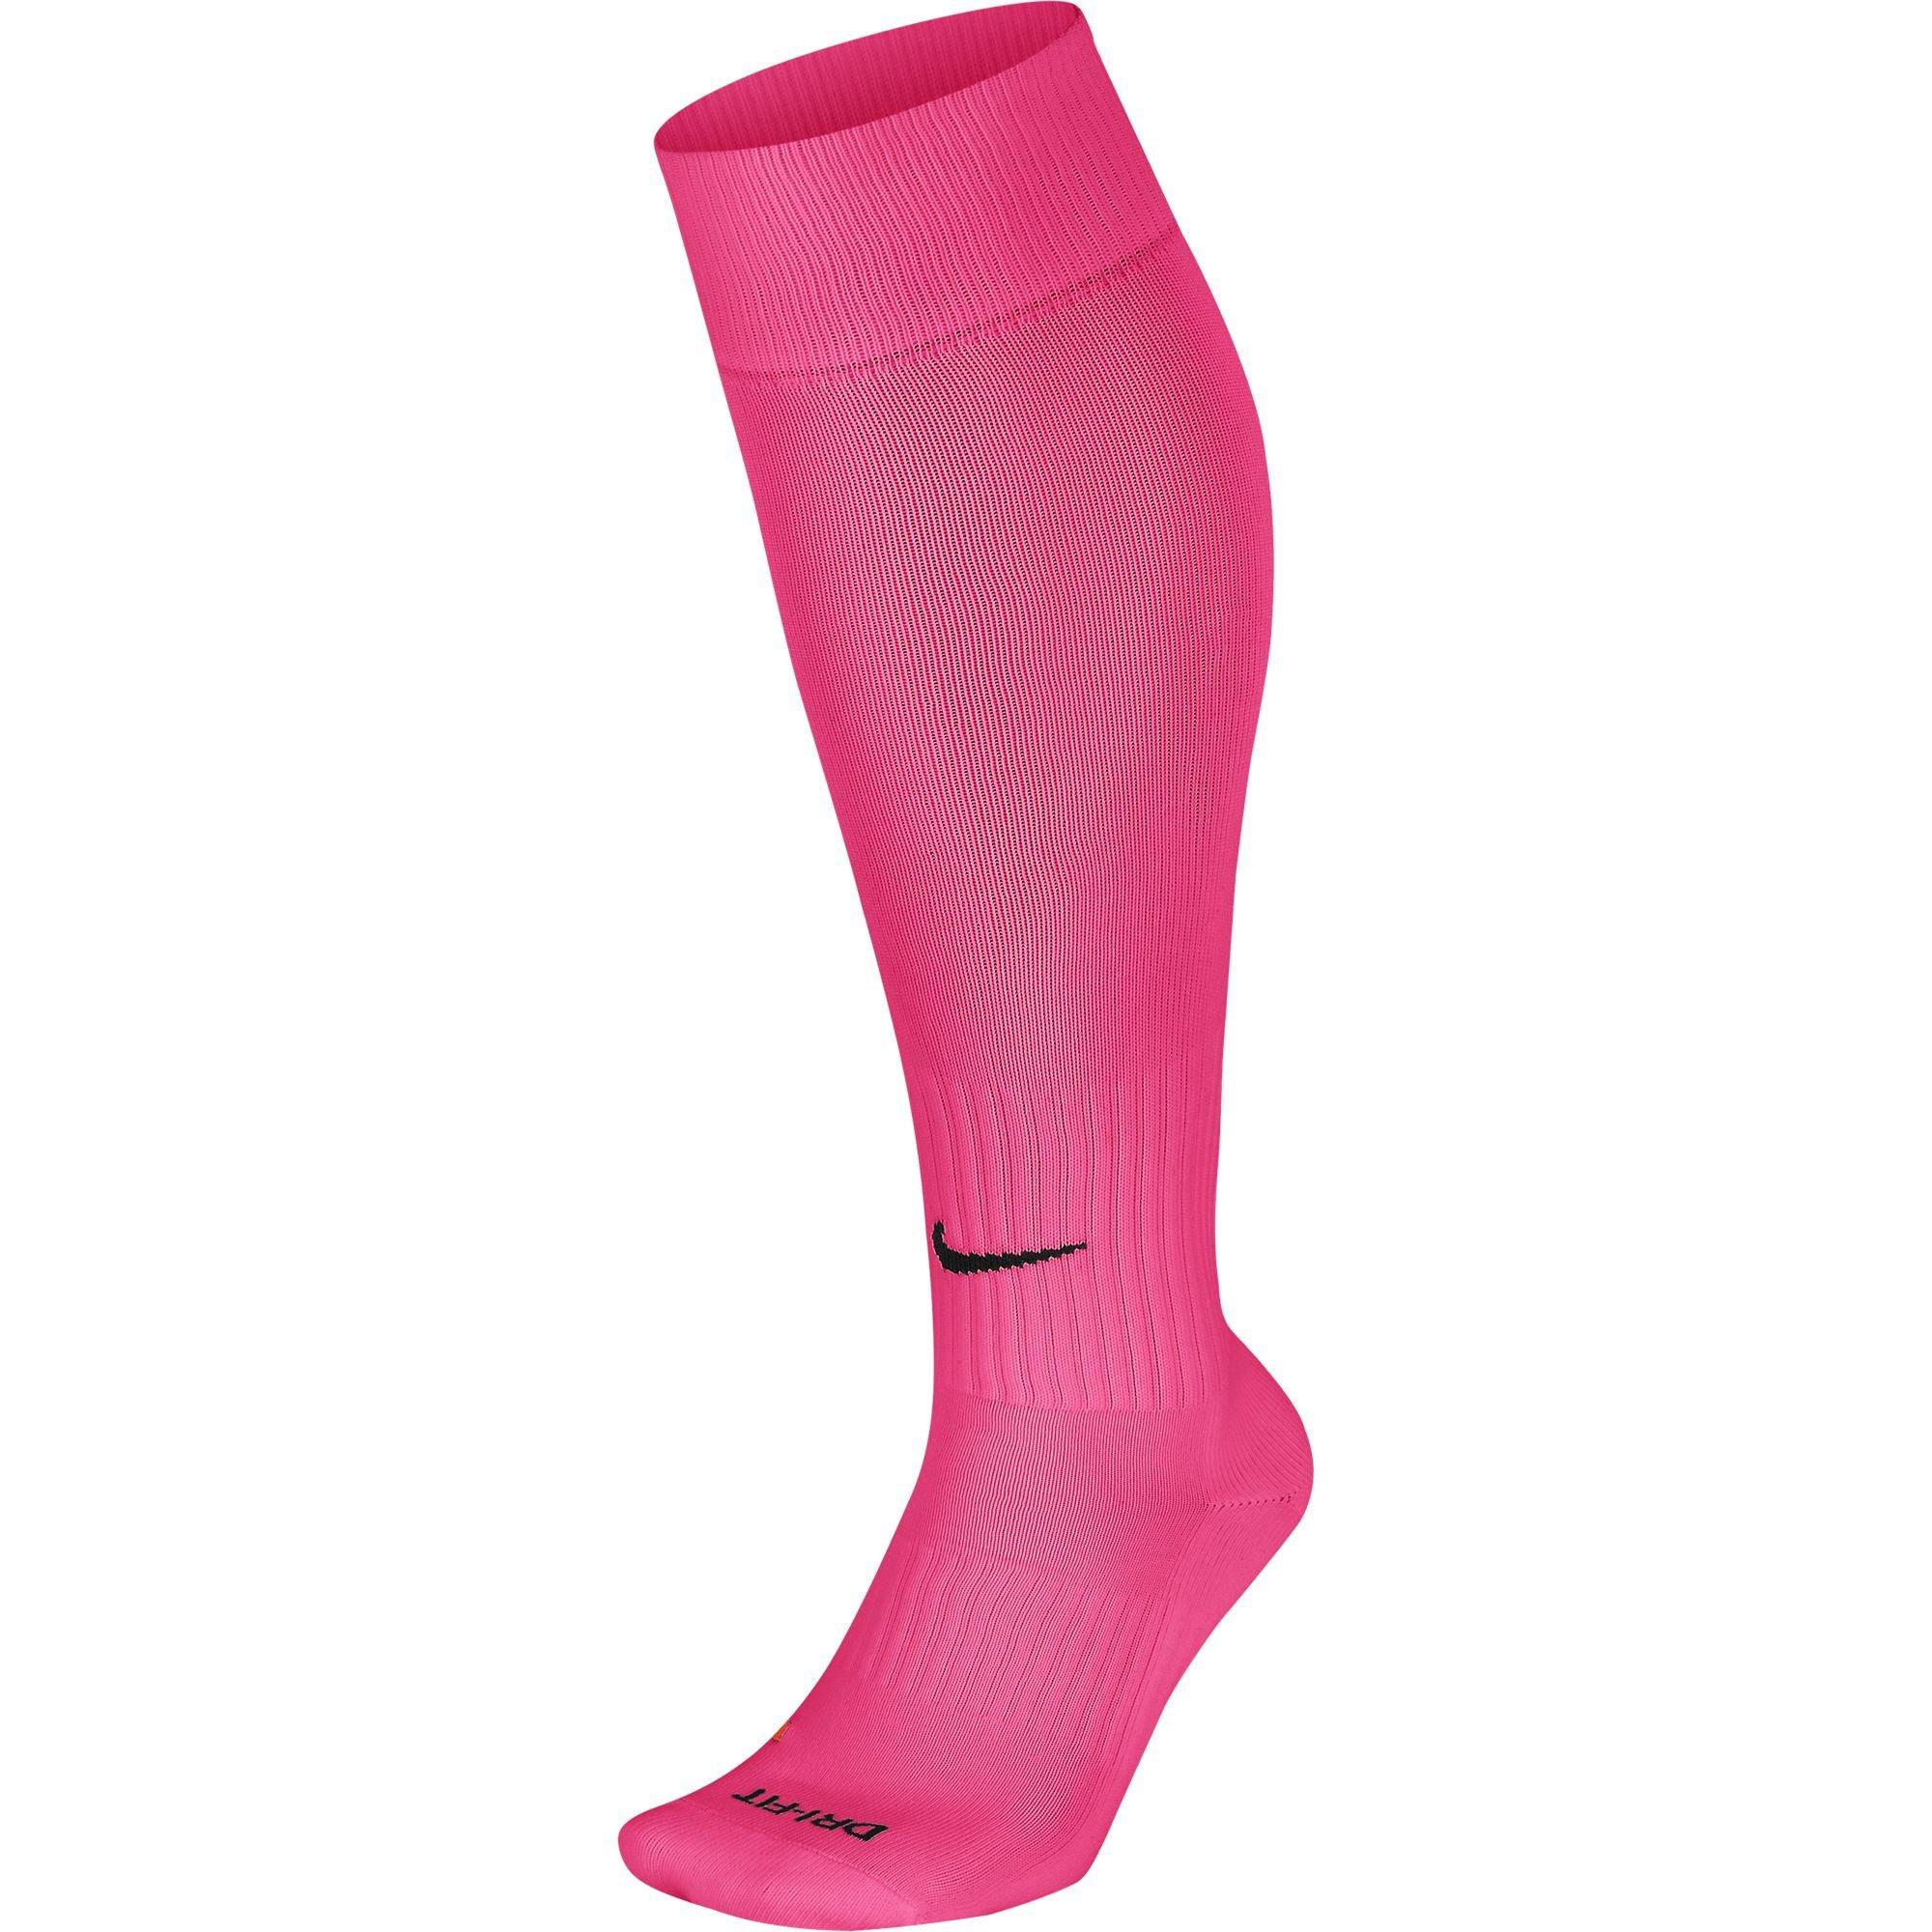 Nike Academy Over-The-Calf Pink Soccer Socks - Medium - Hibbett